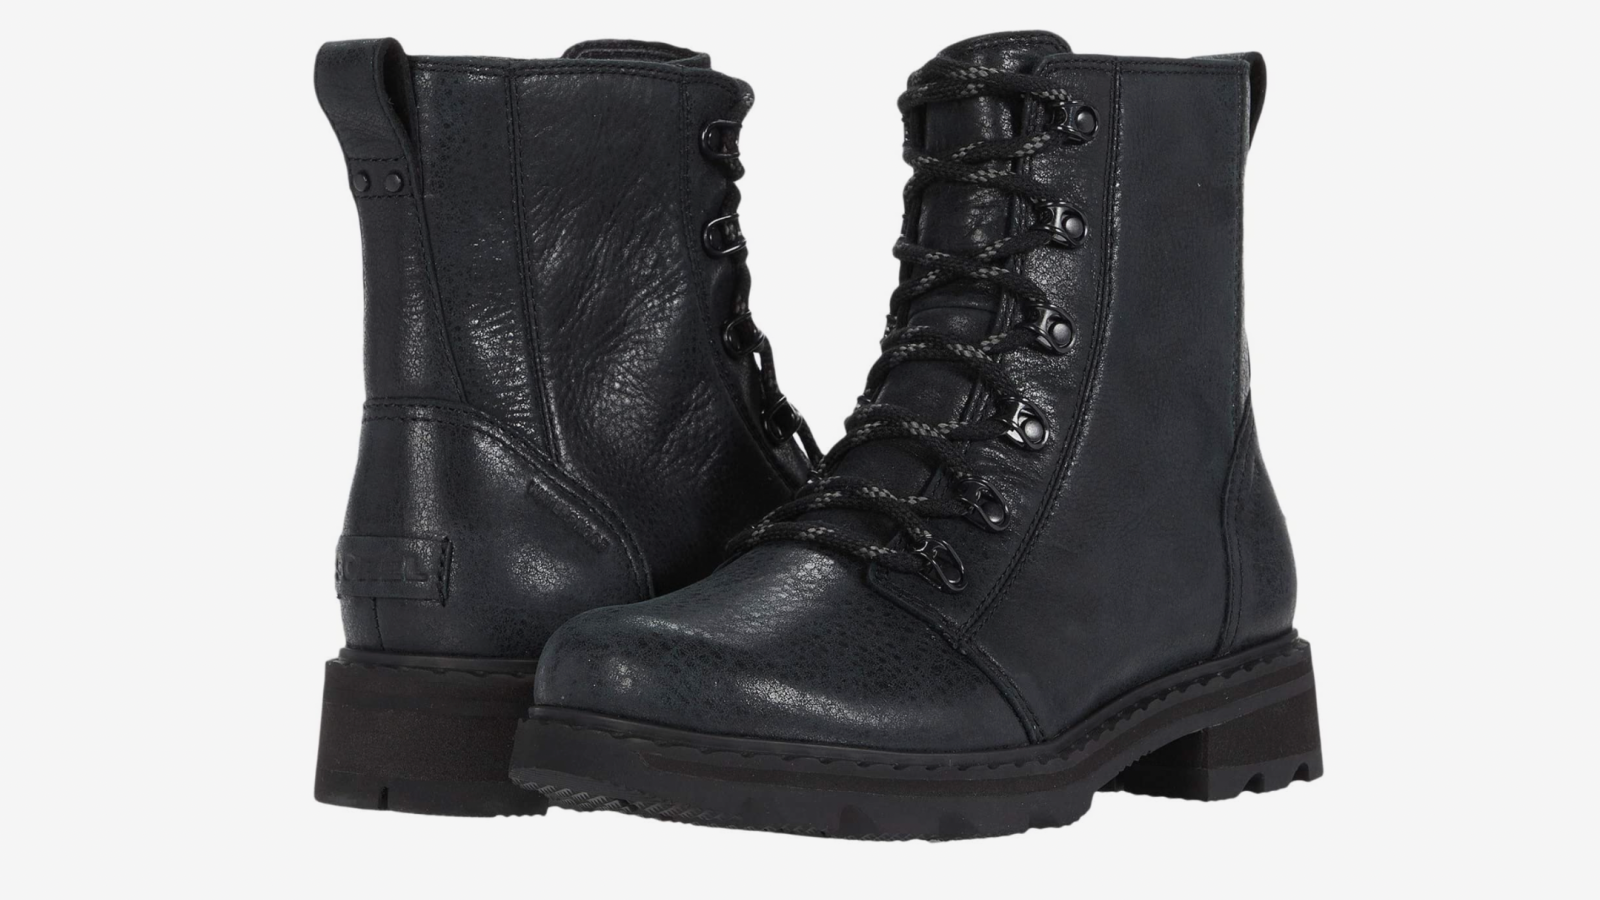 Sorel waterproof black boots